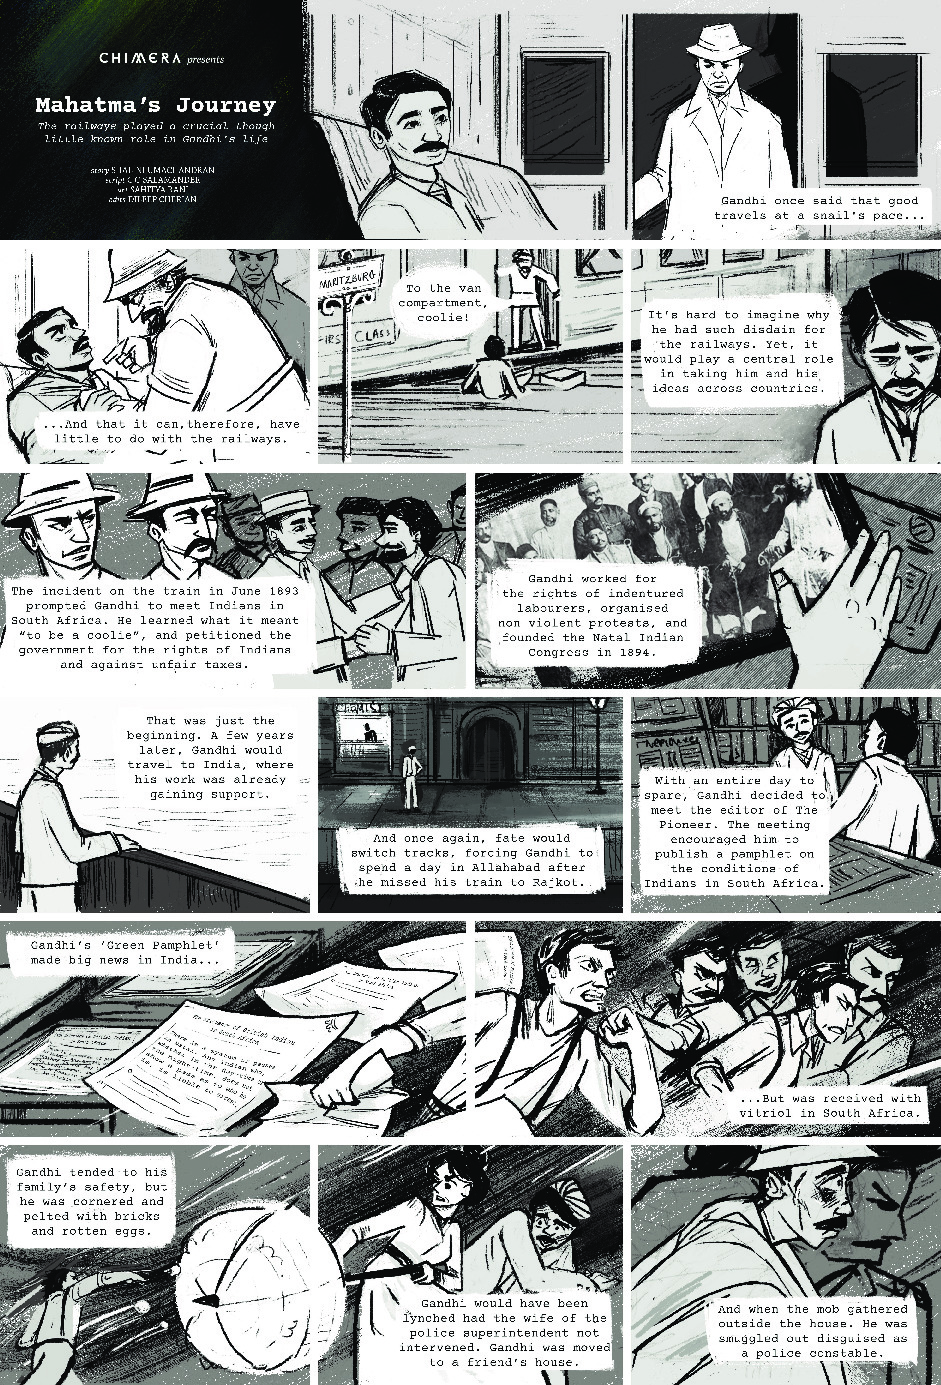 Artwork from 'Gandhi: Journey Train Comic' comic.